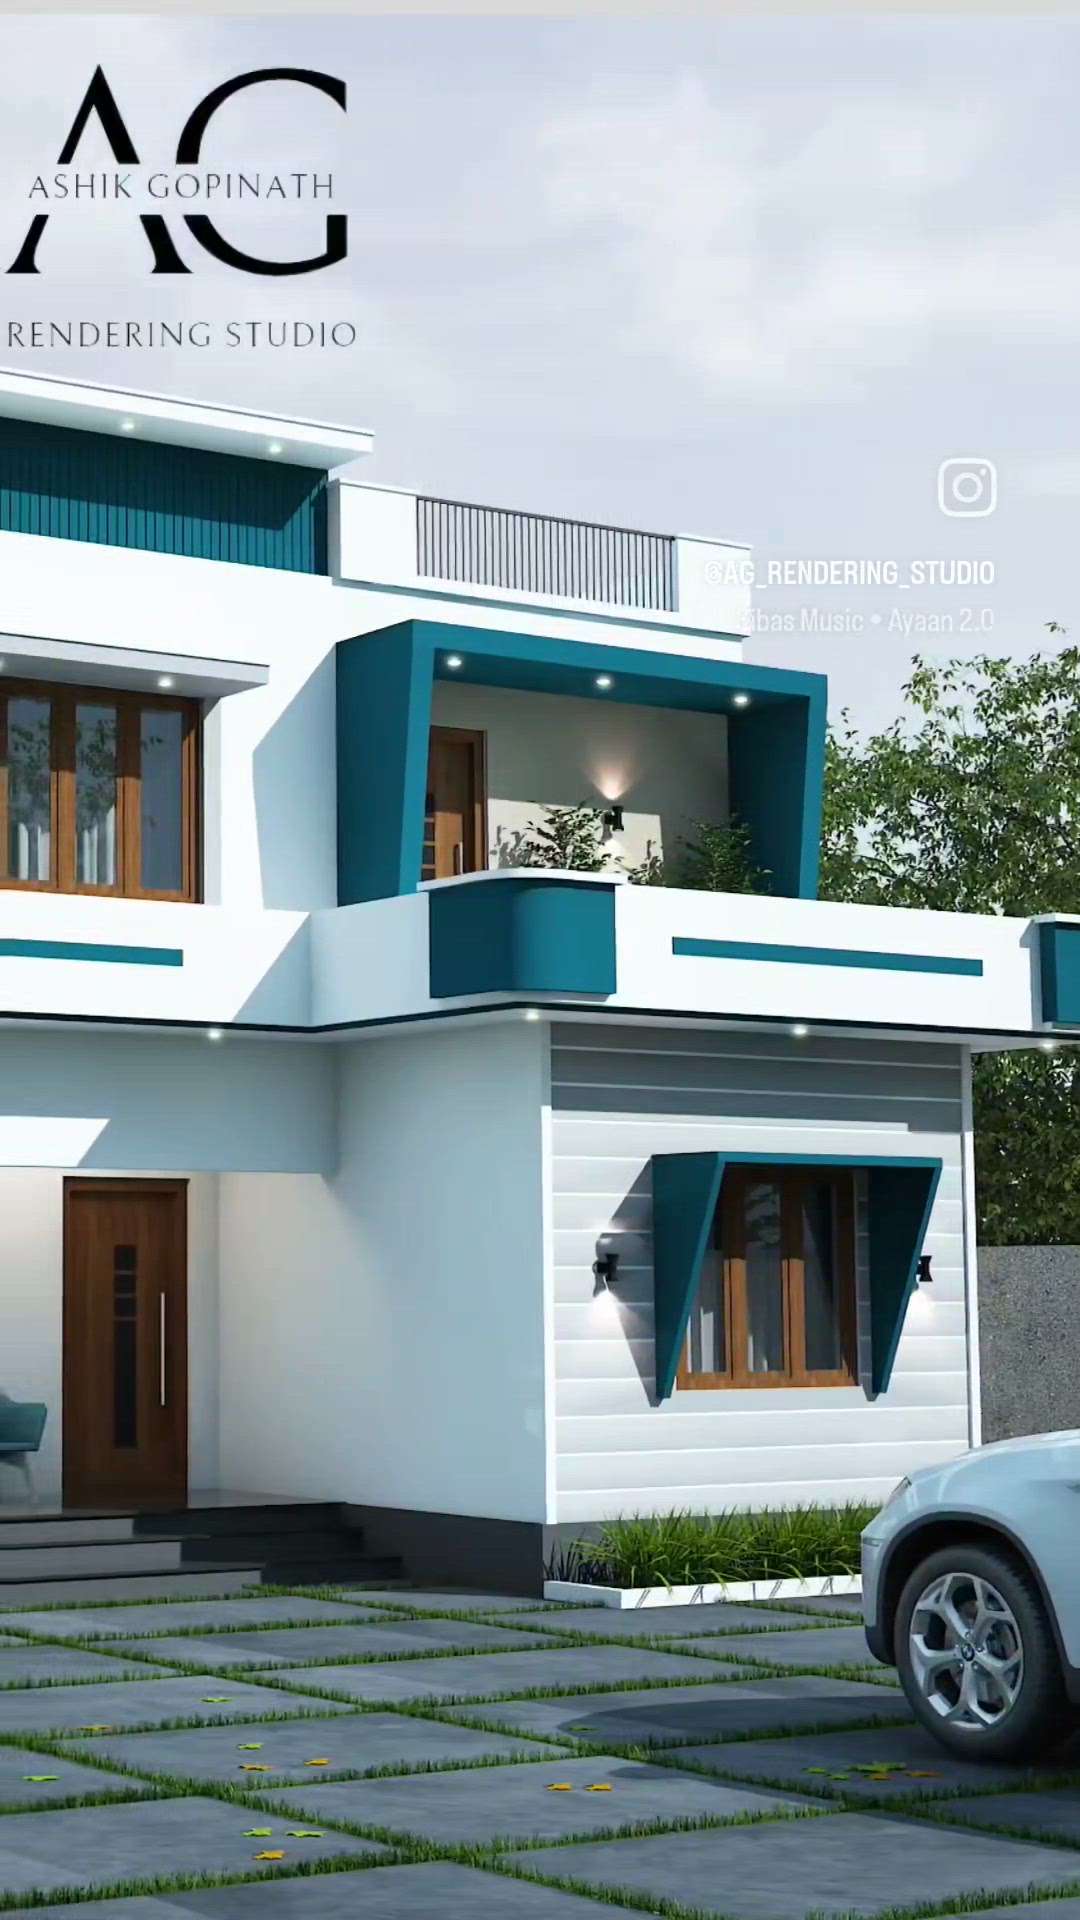 PROPOSED BUDGET DESIGN🏠💛
#KeralaStyleHouse #keralahomedesignz #veedudesign #veed #vanithaveedu #keralahomeplans #kerala_architecture #keralahomeinterior #koloapp #ElevationHome #ElevationDesign #home3ddesigns #3dhousedesigns #besthousedesign #HomeDecor #ContemporaryHouse #budgethomes